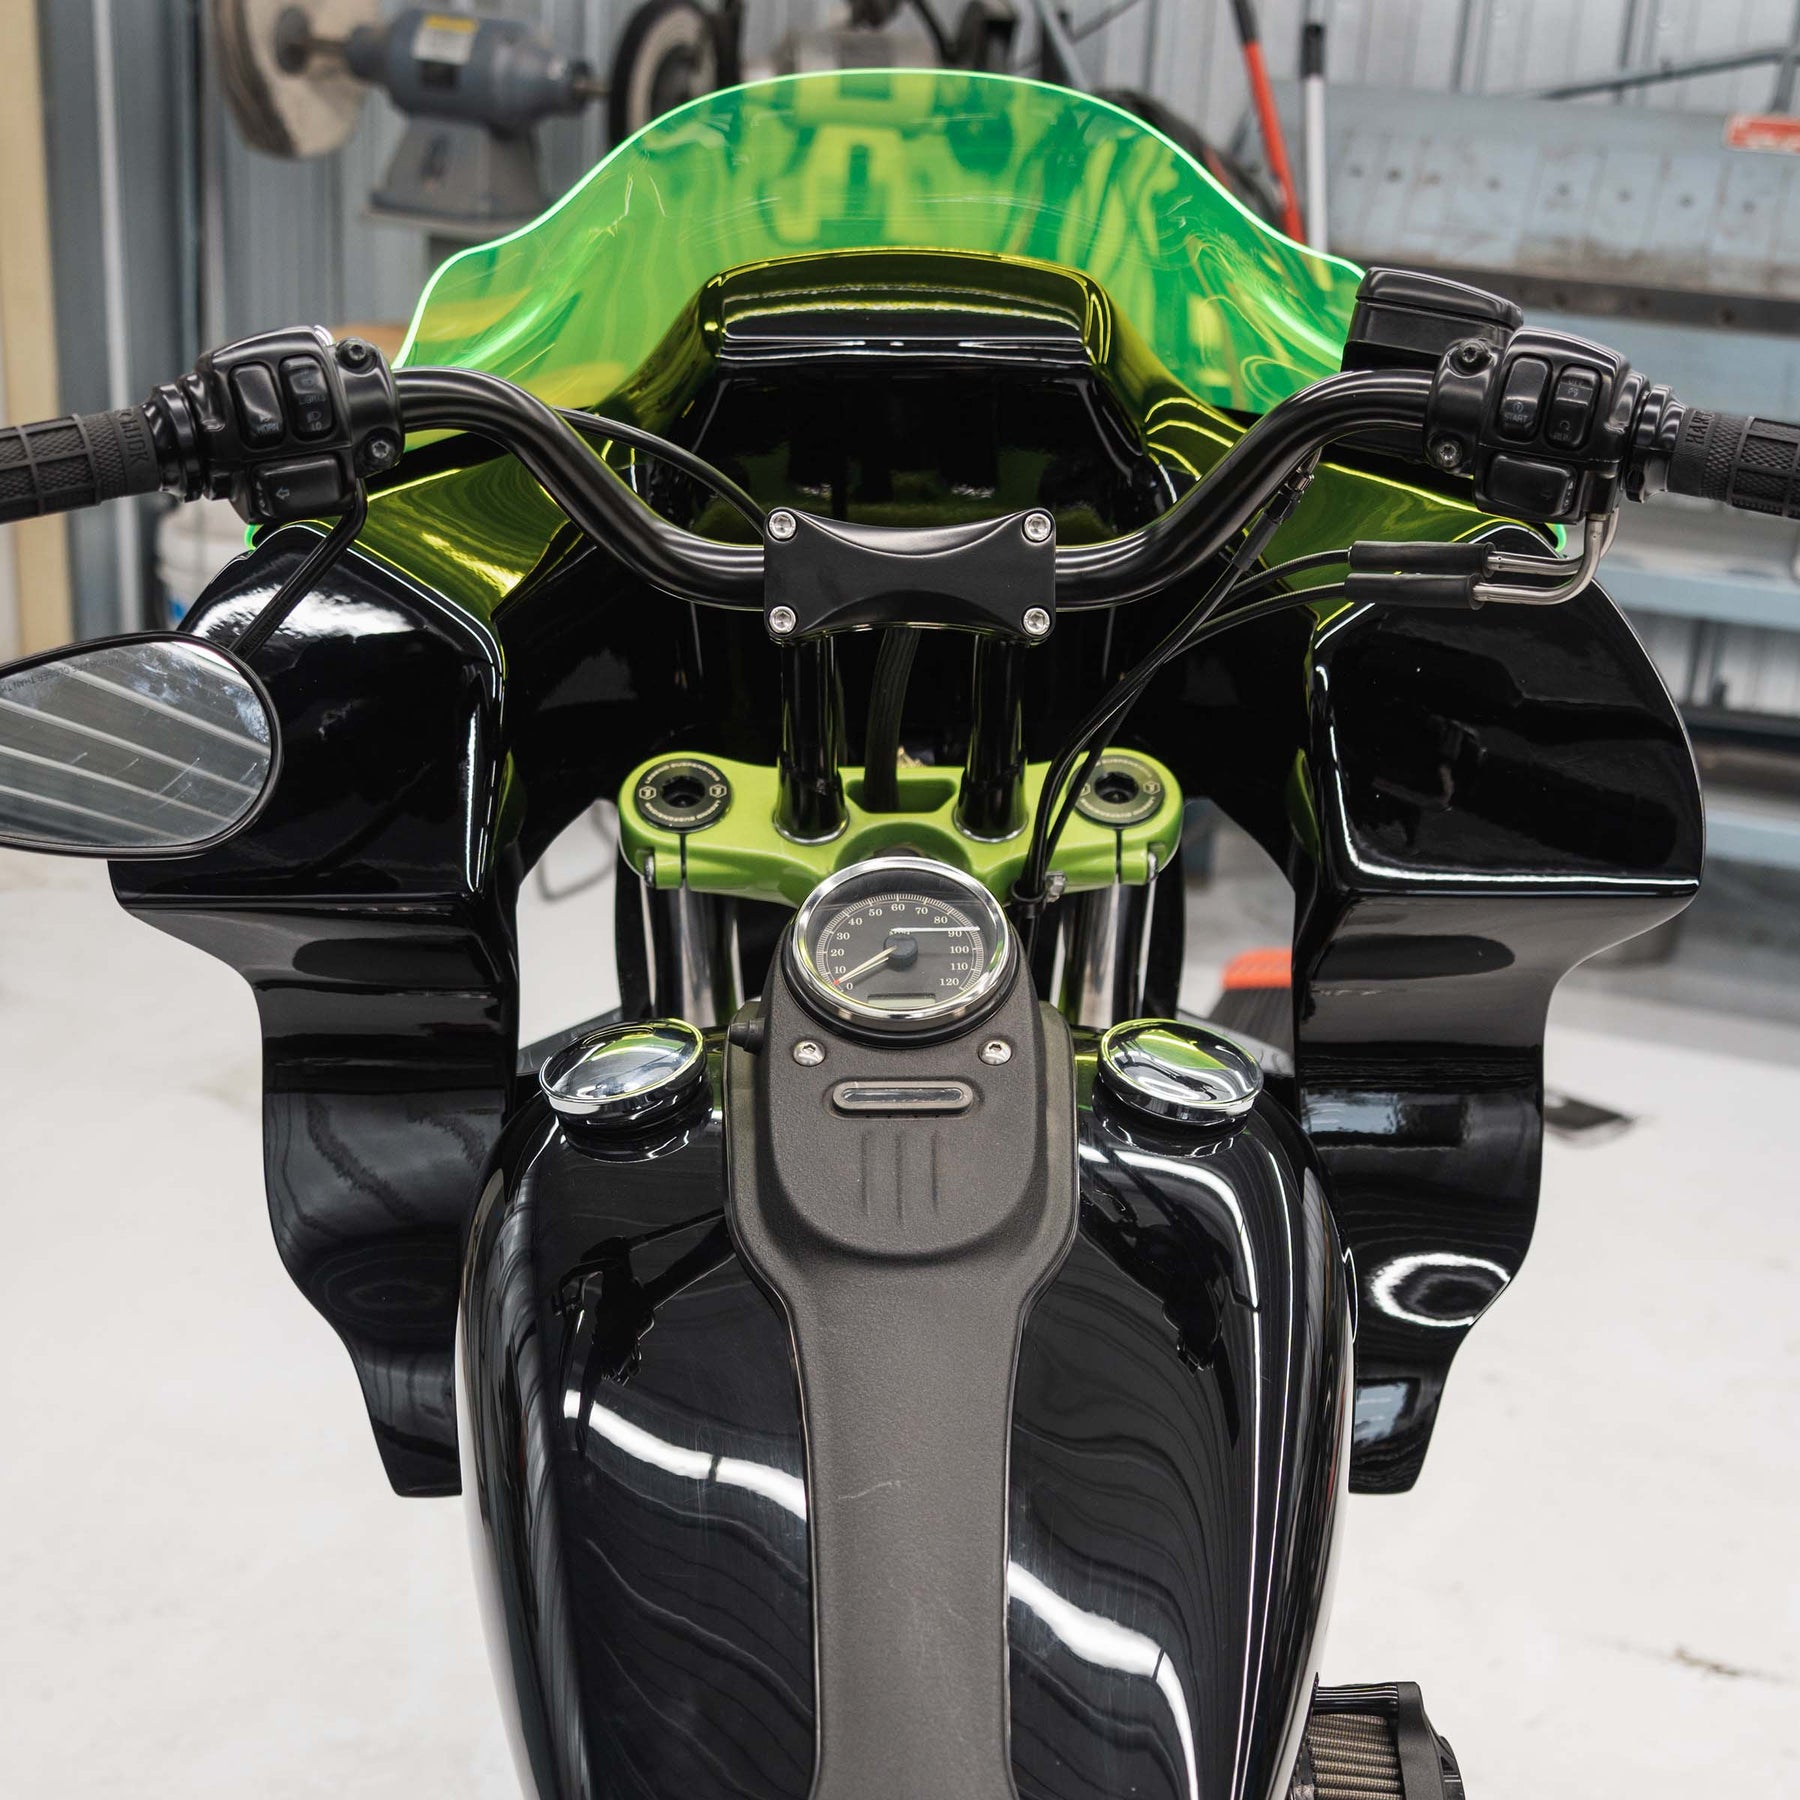 Harley-Davidson FXRP Fairing Fit Kit for newer model Dyna Motorcycles 